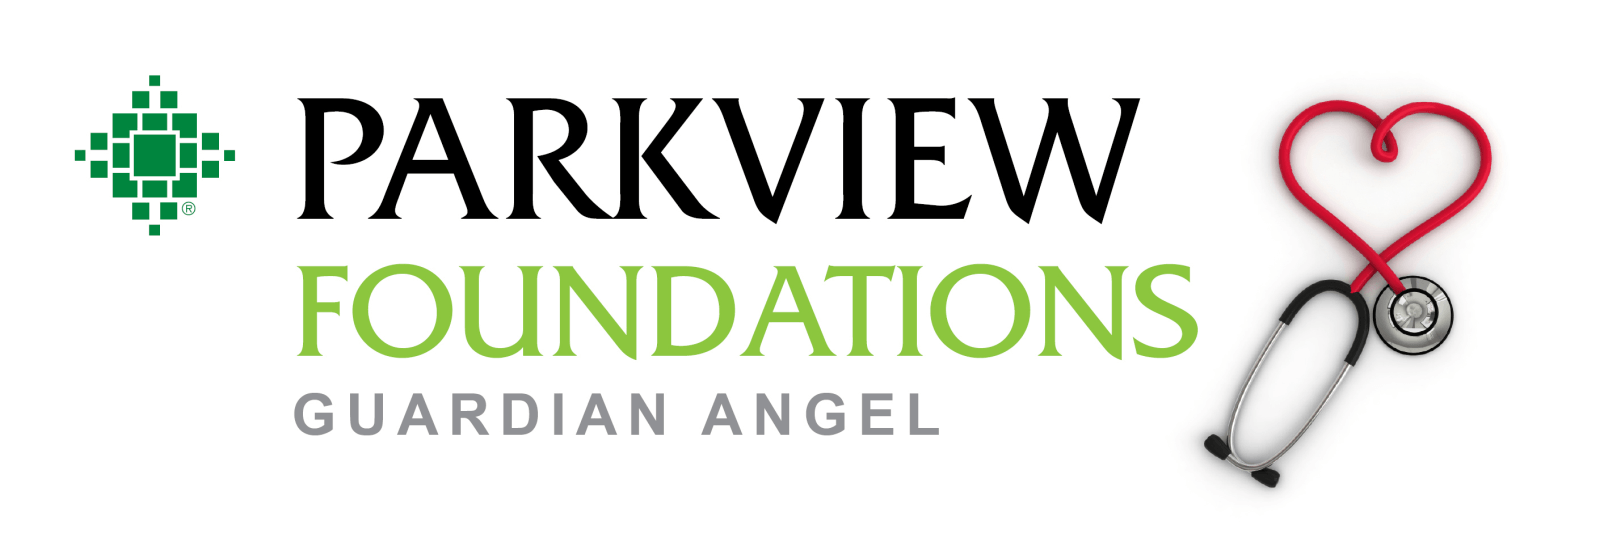 Parkview Logo - Guardian Angel